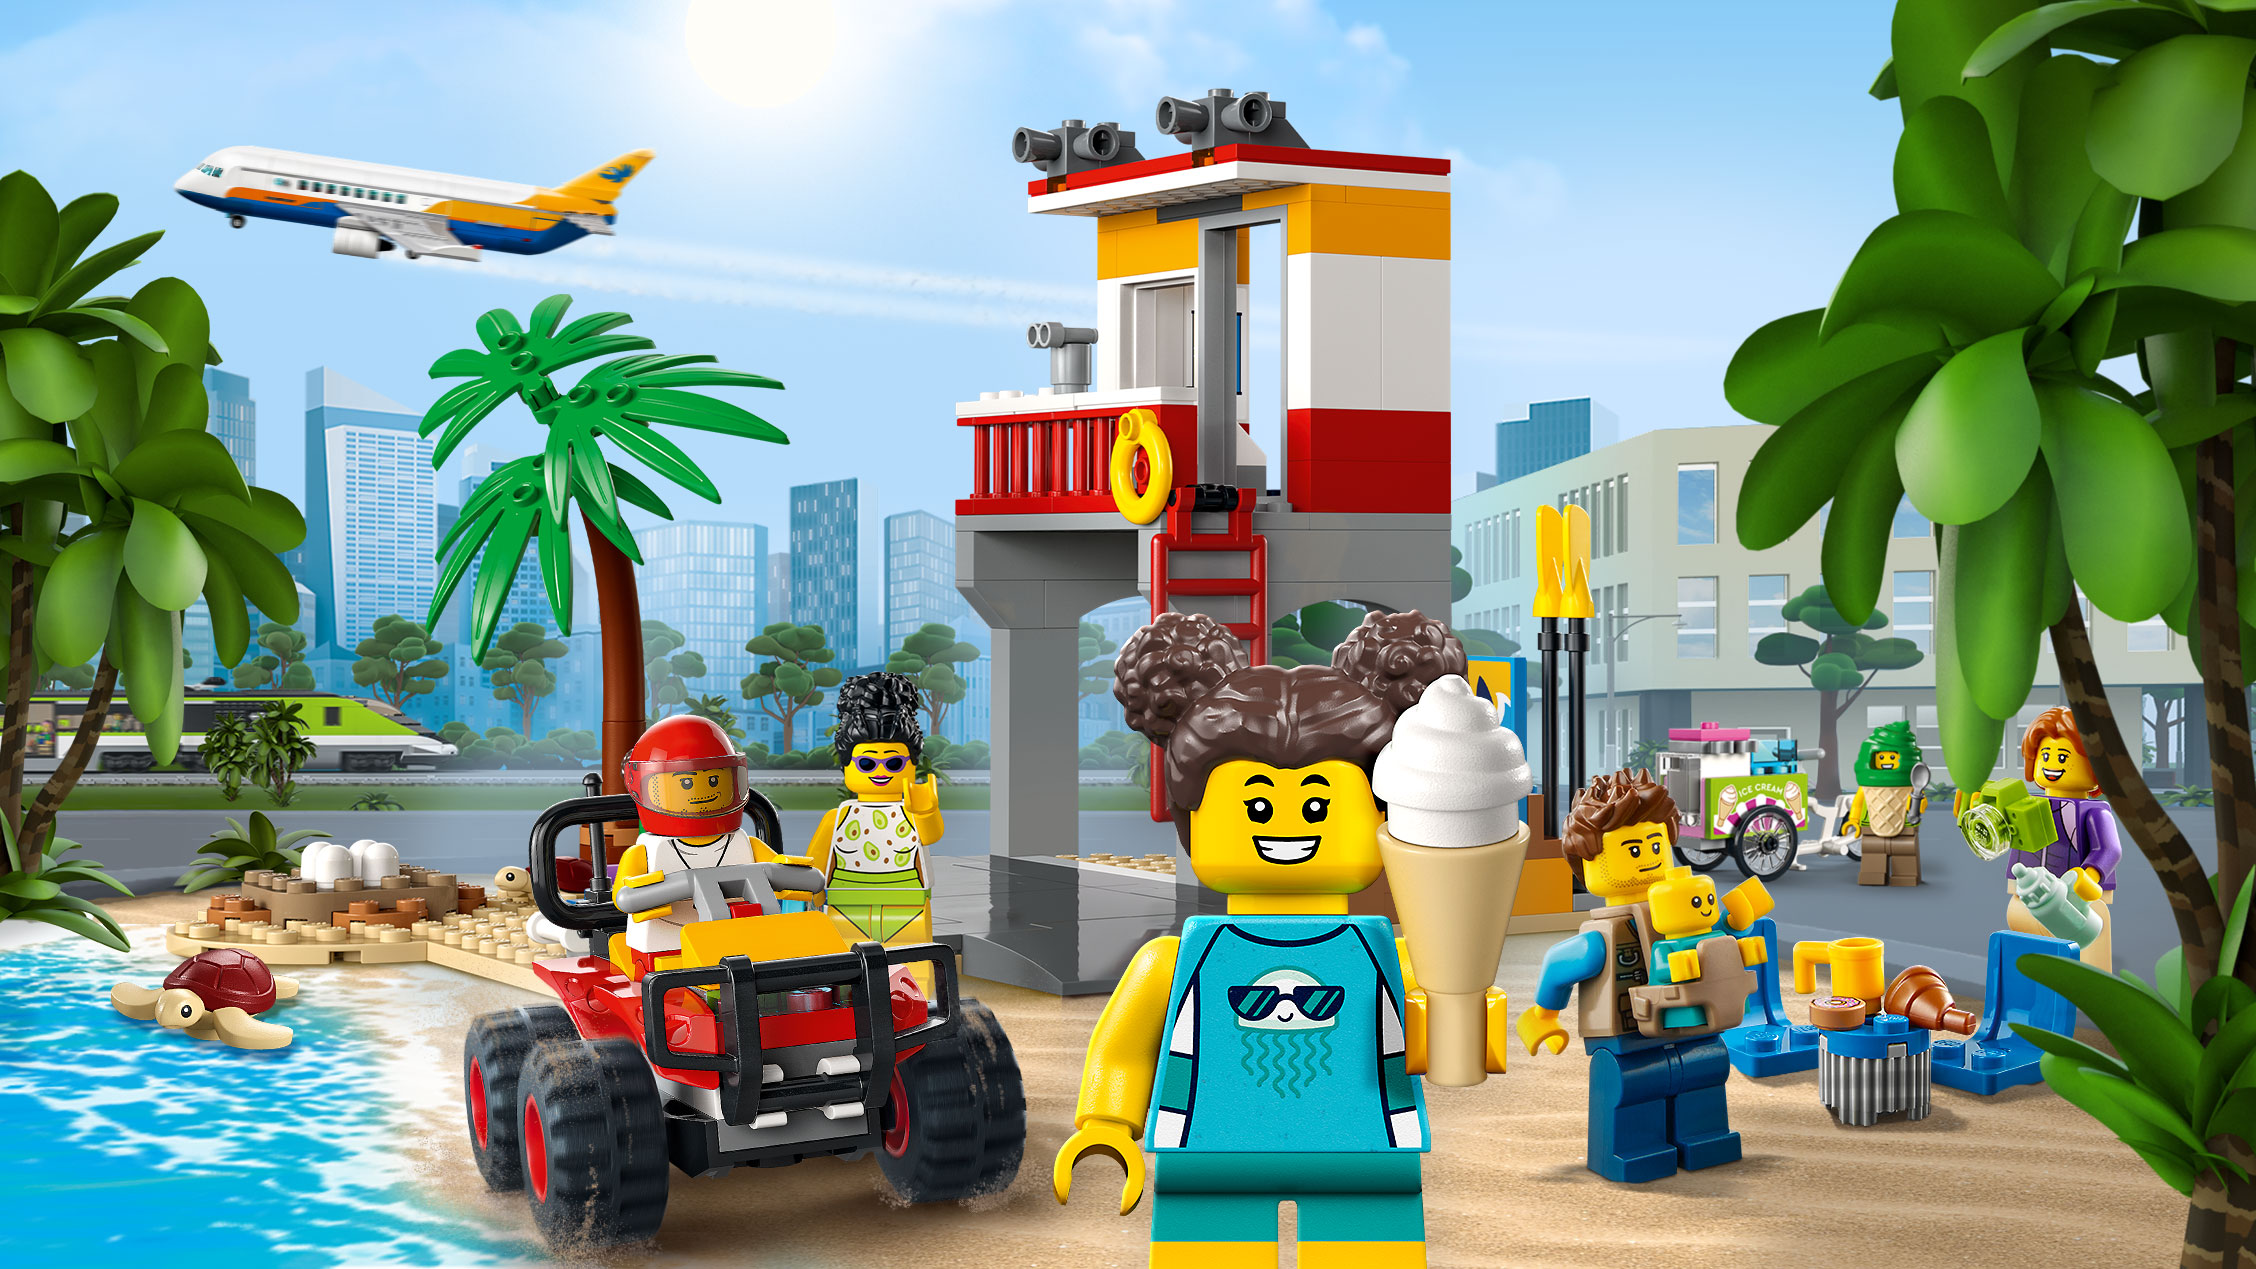 City - Build fun stuff LEGO® bricks